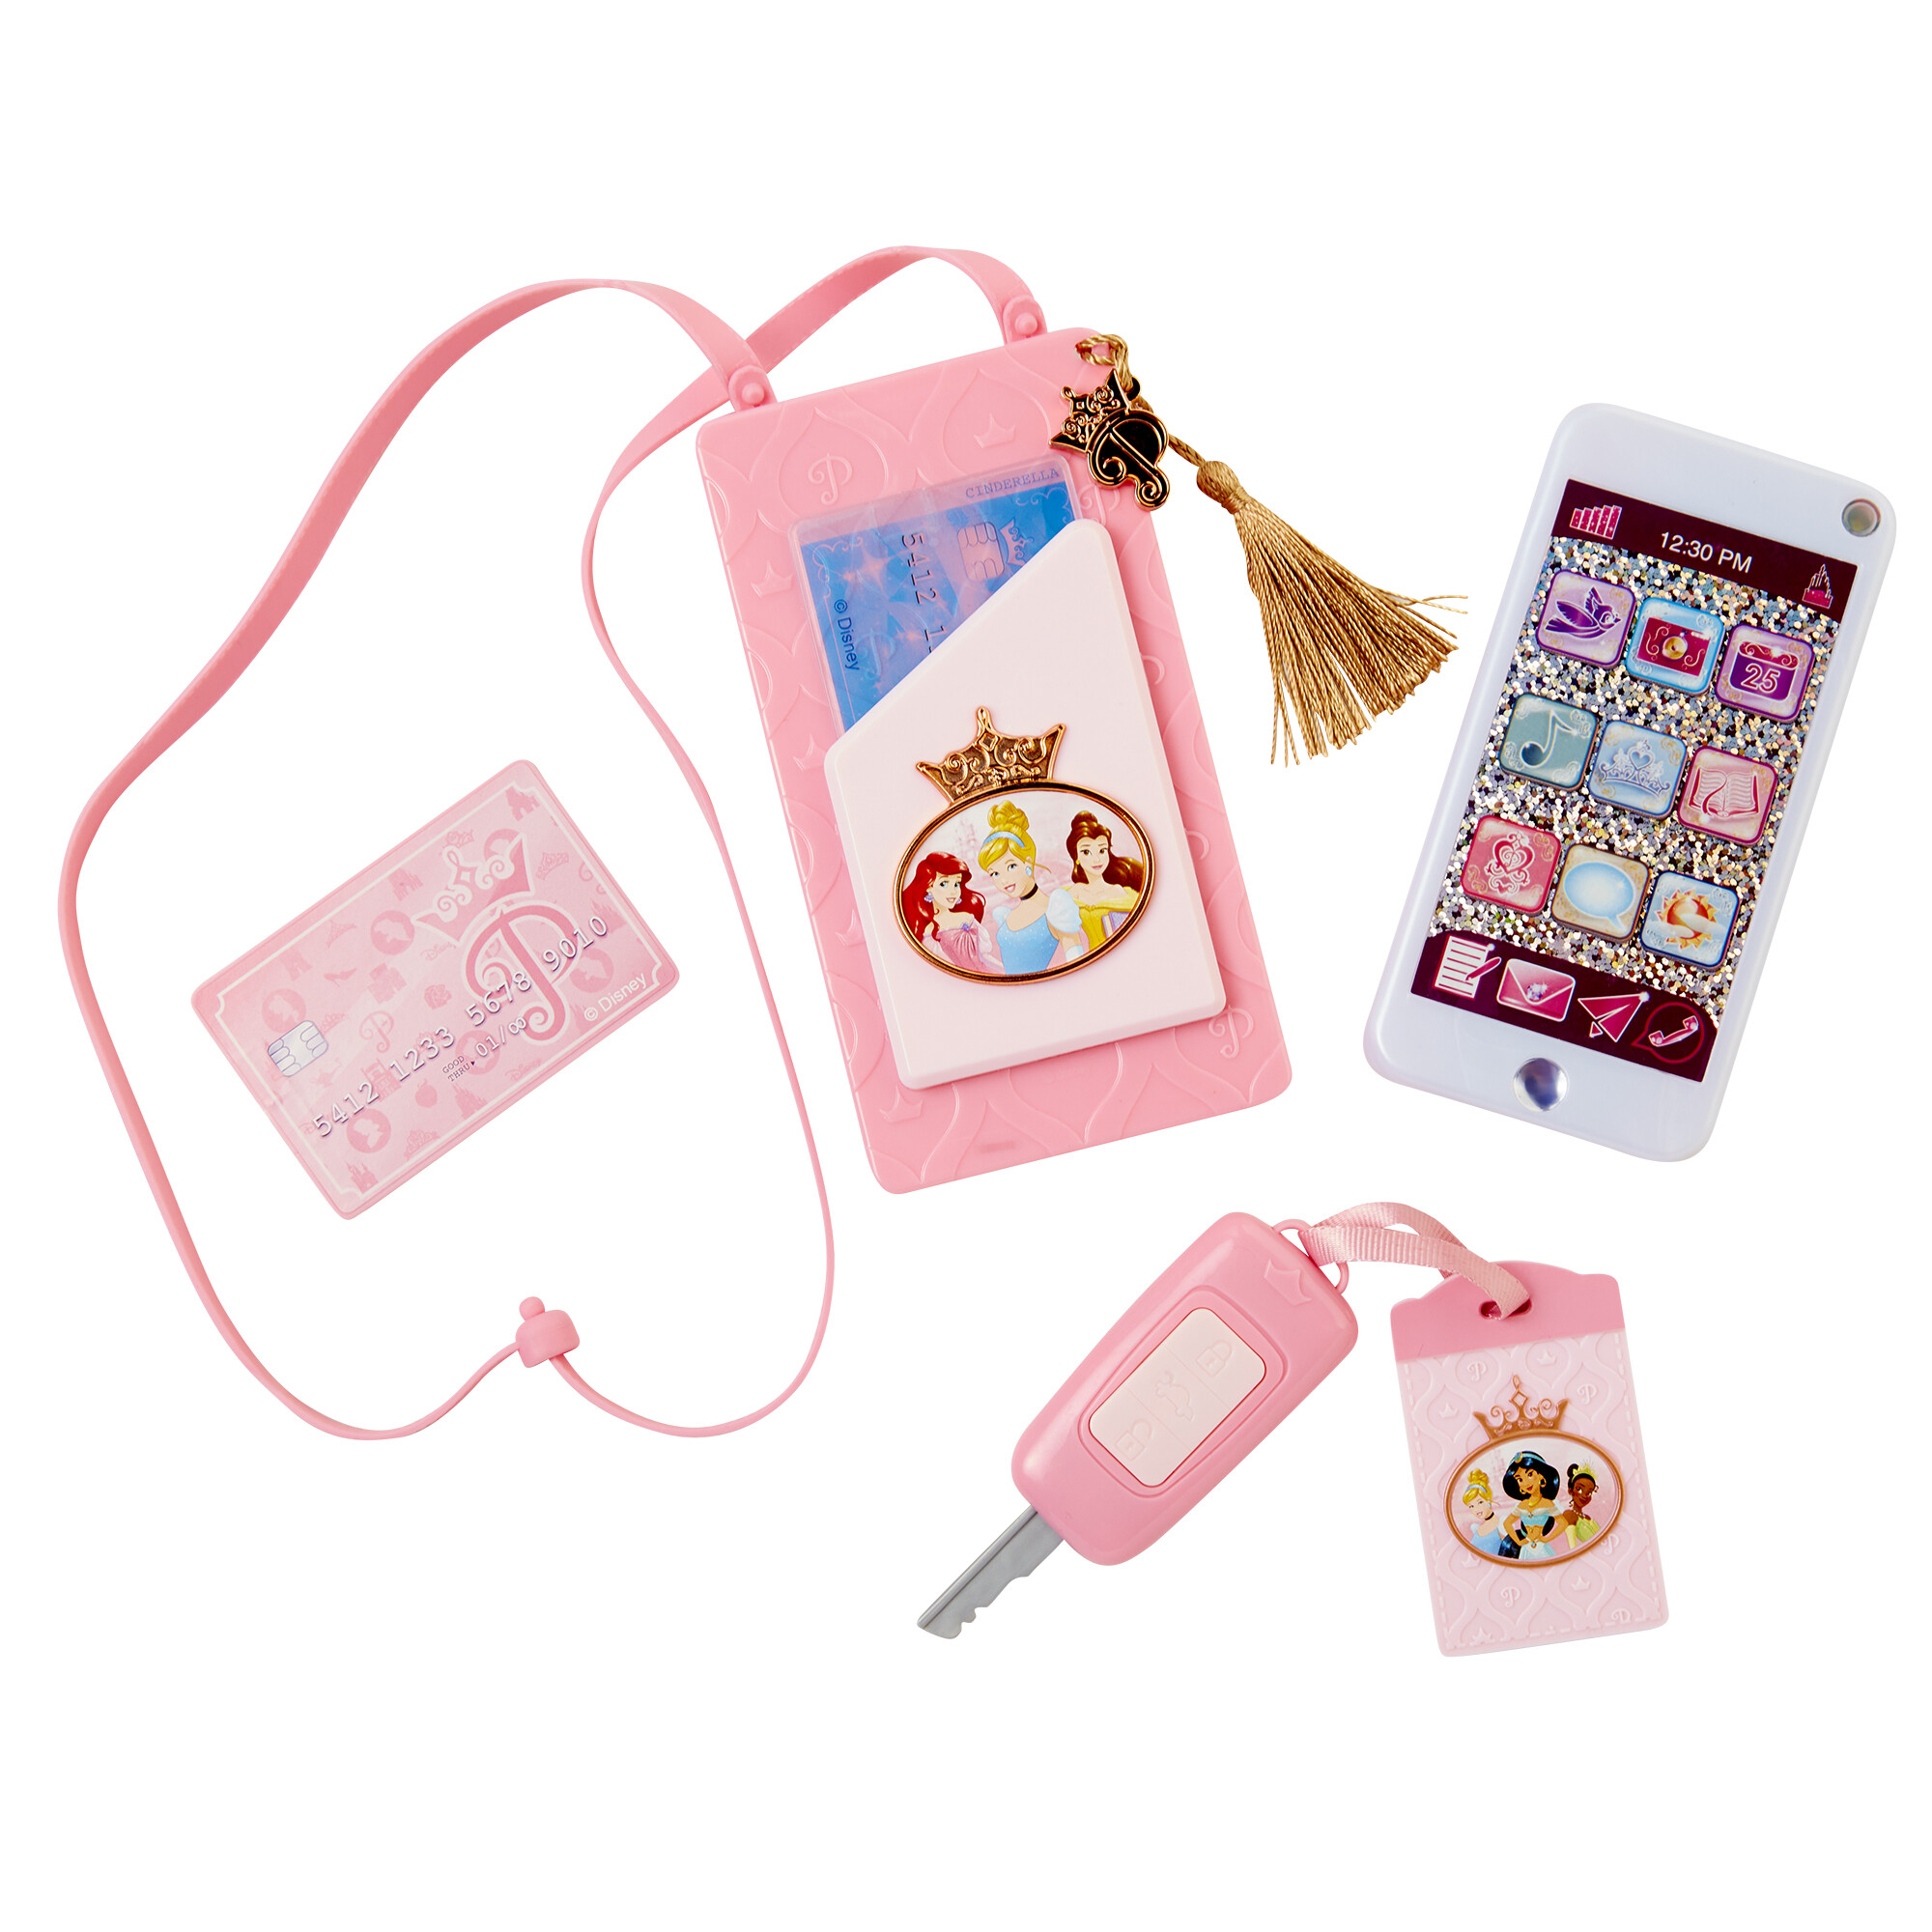 Disney princess style collection set on-the-go smartphone - DISNEY PRINCESS